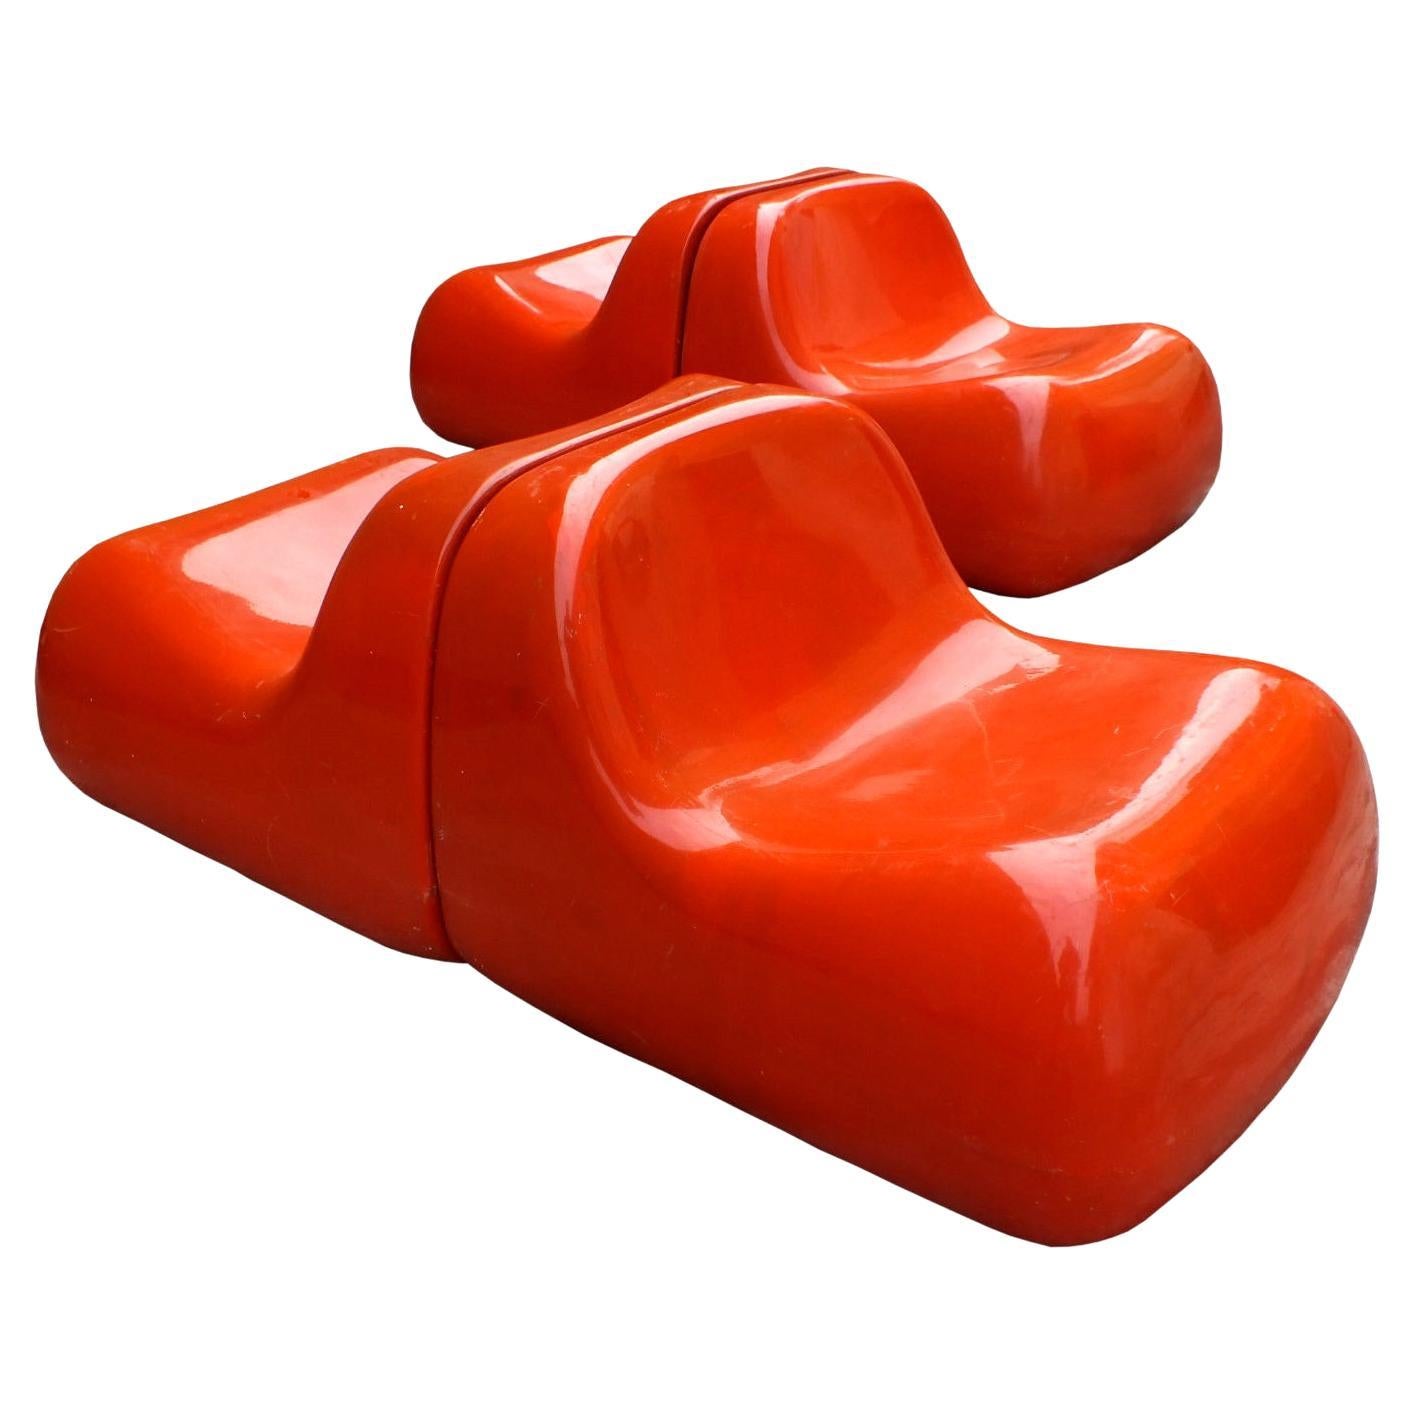 Saporiti Italy year ’68 design Alberto Rosselli two (2)armchair jumbo fiberglass For Sale